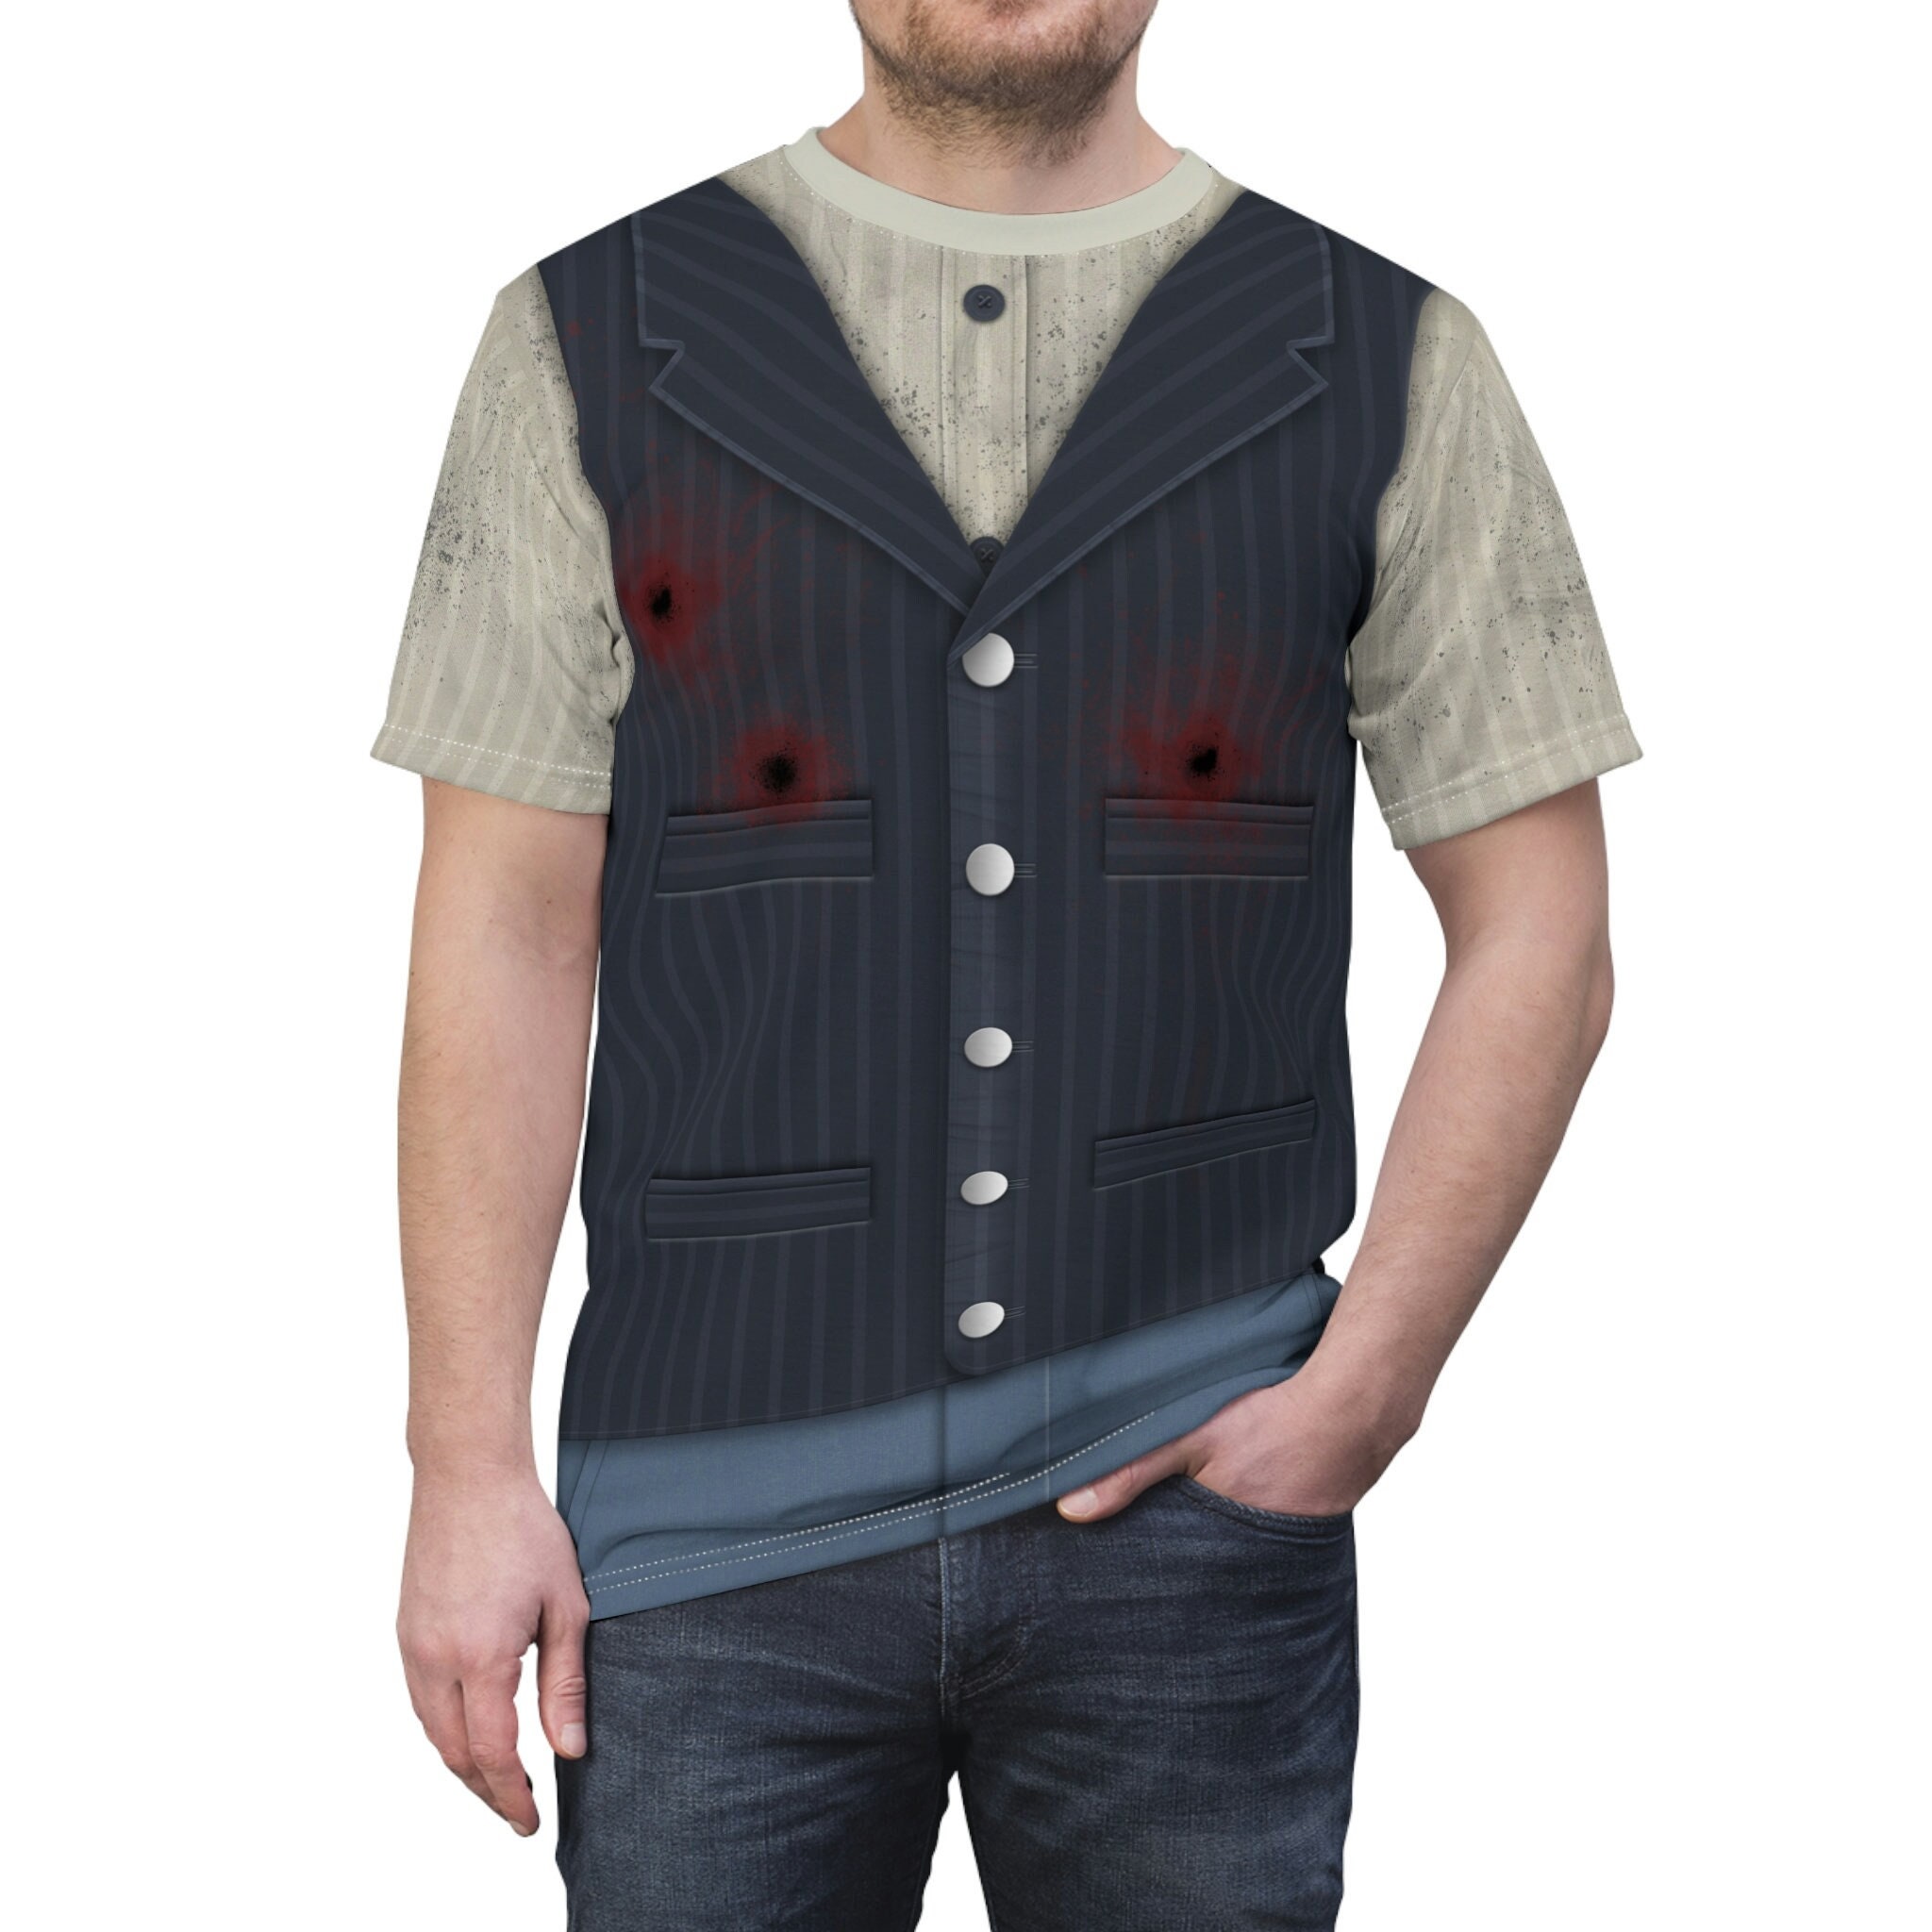 Discover Cadaver Dans Waistcoat Shirt, Haunted Mansion Cosplay 3D Shirt